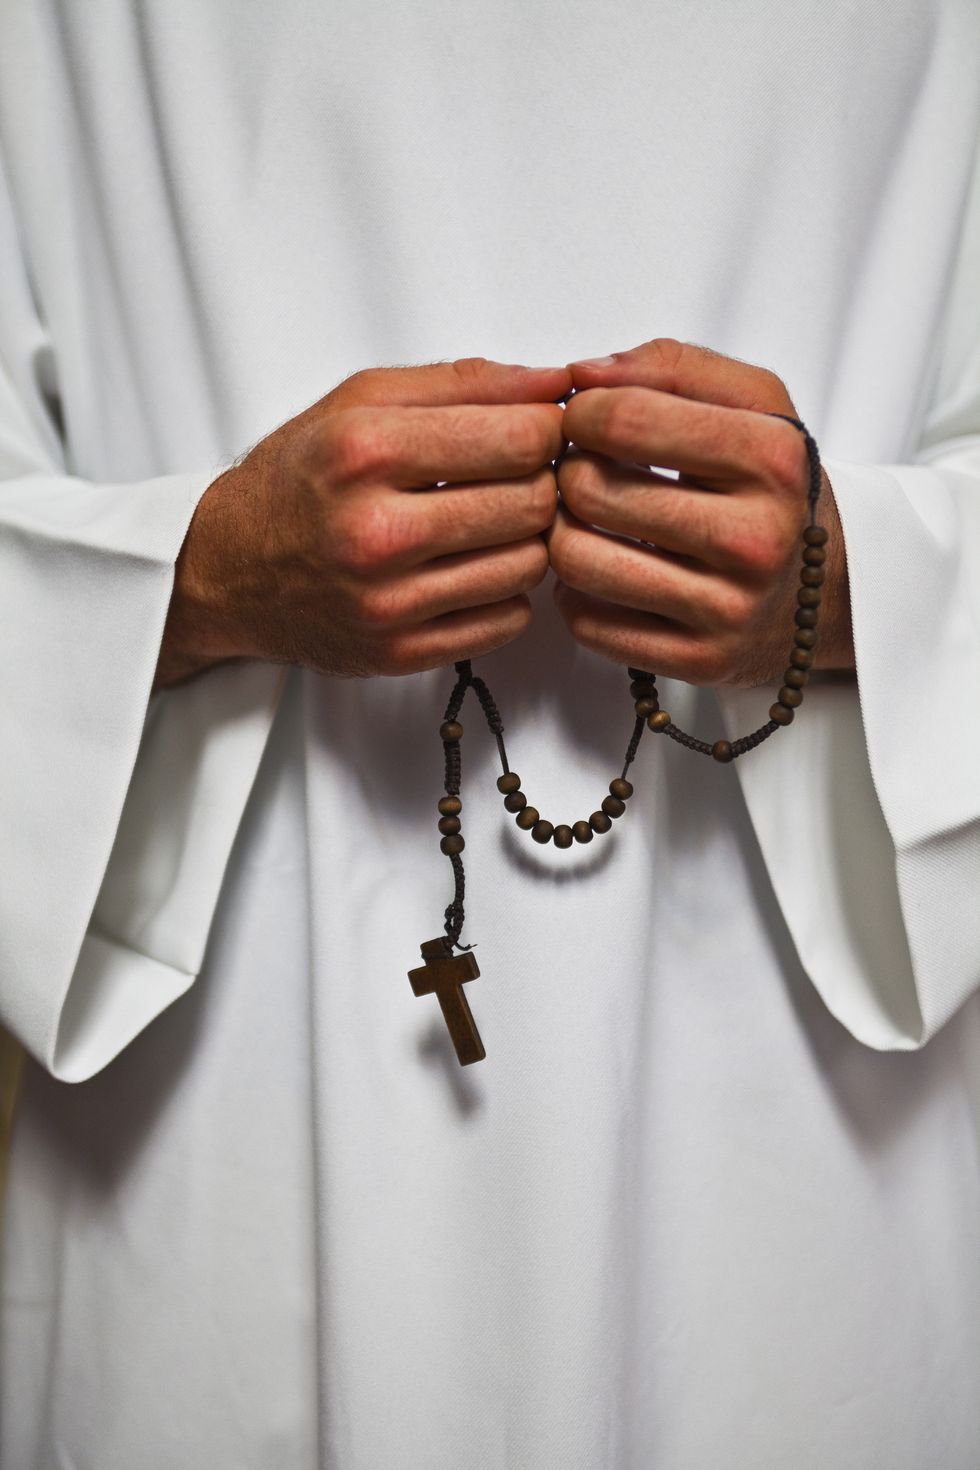 Priest, religion, rosary beads